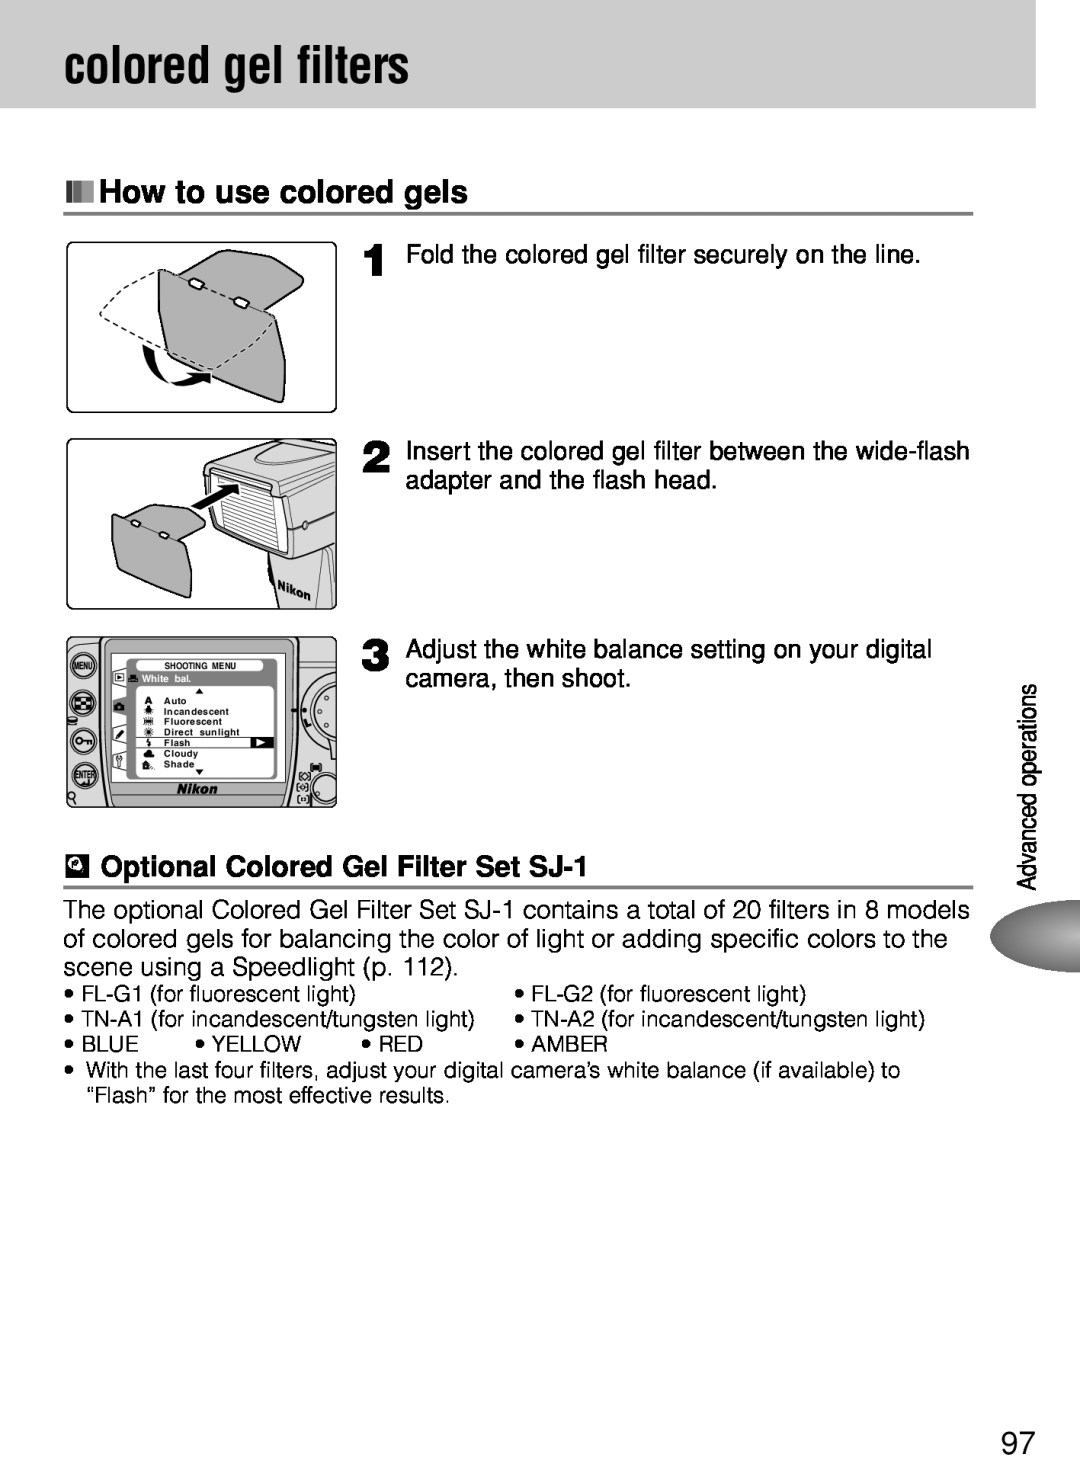 Nikon SB-800 instruction manual colored gel filters, How to use colored gels, u Optional Colored Gel Filter Set SJ-1 